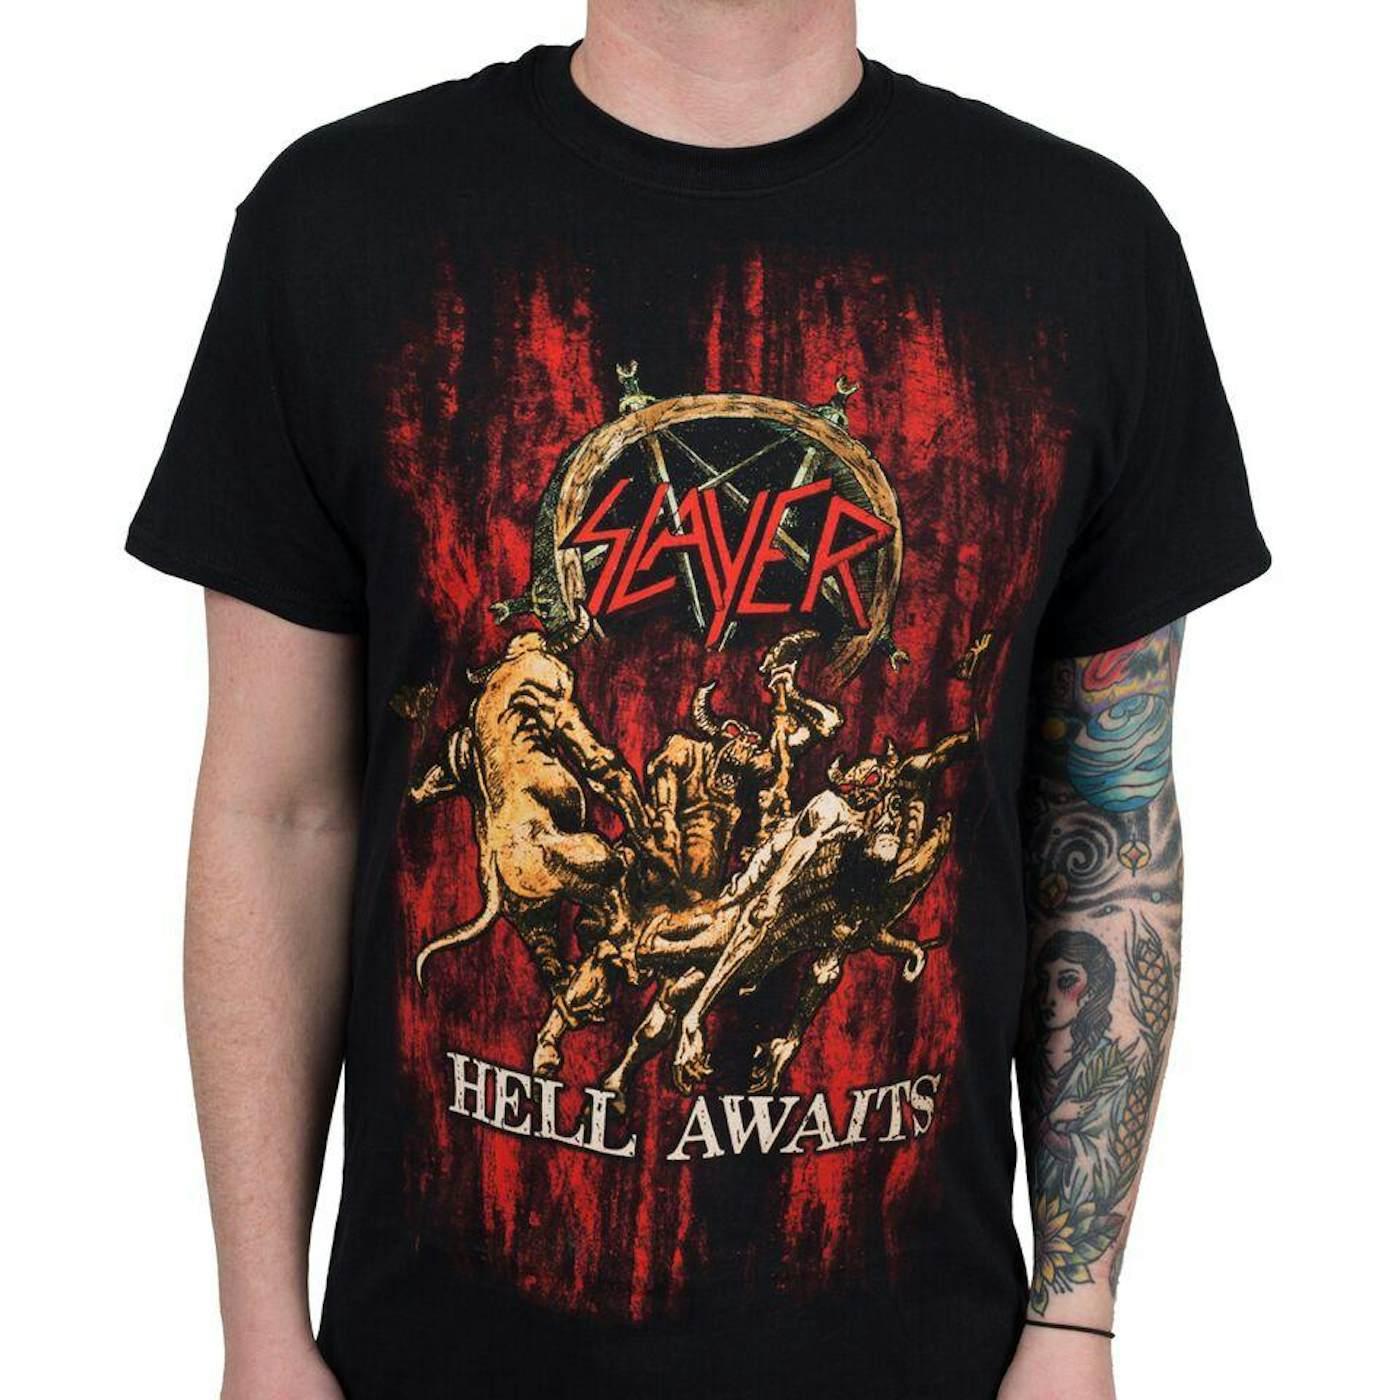 Slayer - Live Undead Patch, Patches, Merchandise